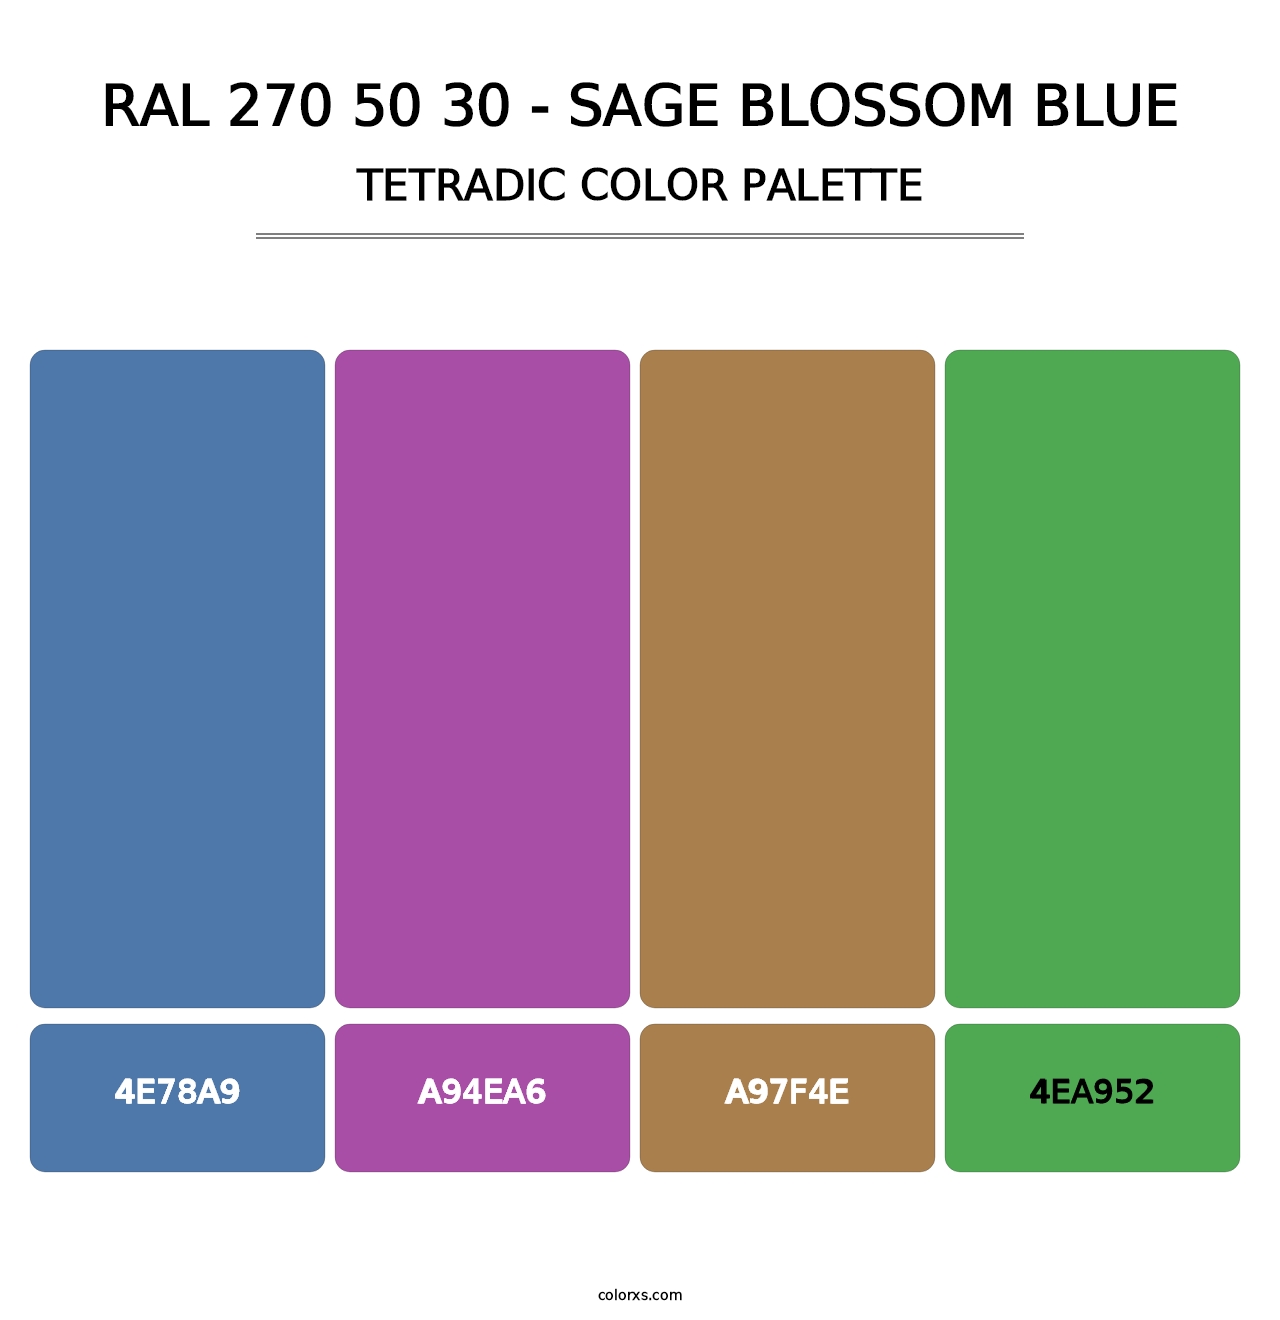 RAL 270 50 30 - Sage Blossom Blue - Tetradic Color Palette